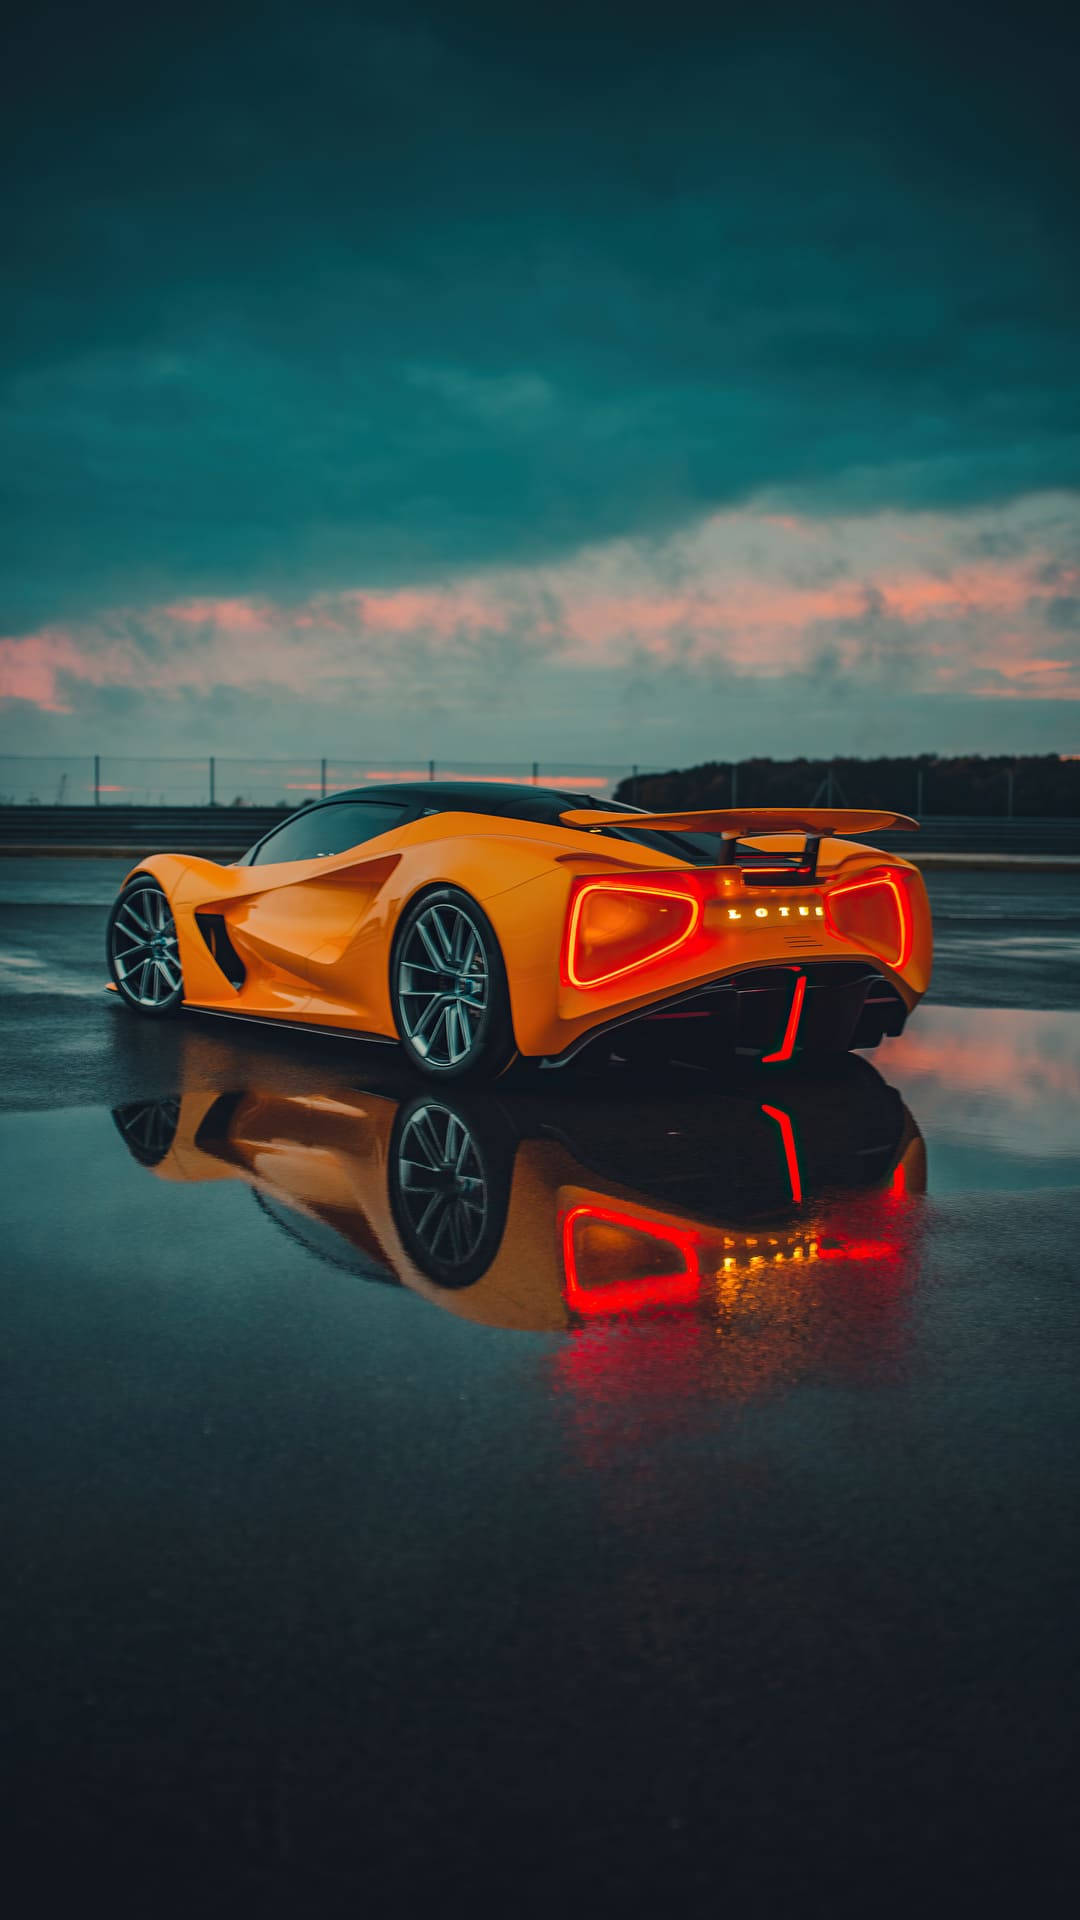 A Futuristic Orange Car Sitting On A Wet Surface Background